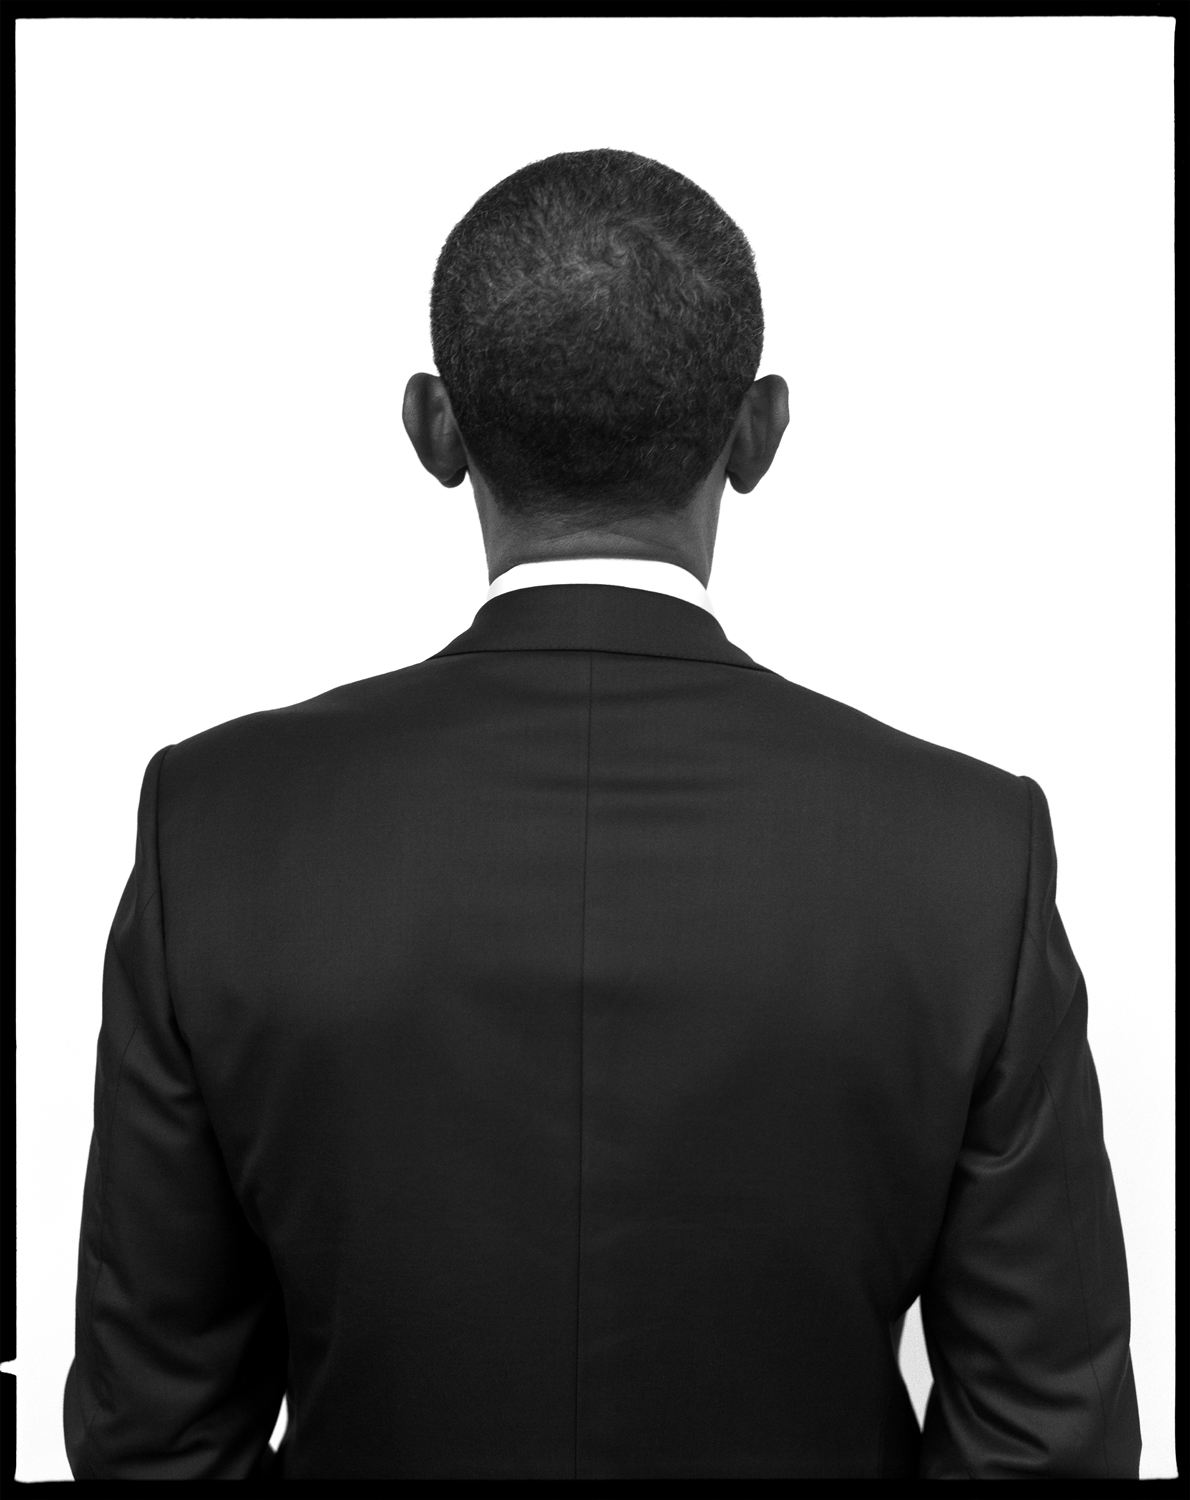 Barack Obama, Washington D.C. photograph by Mark Seliger